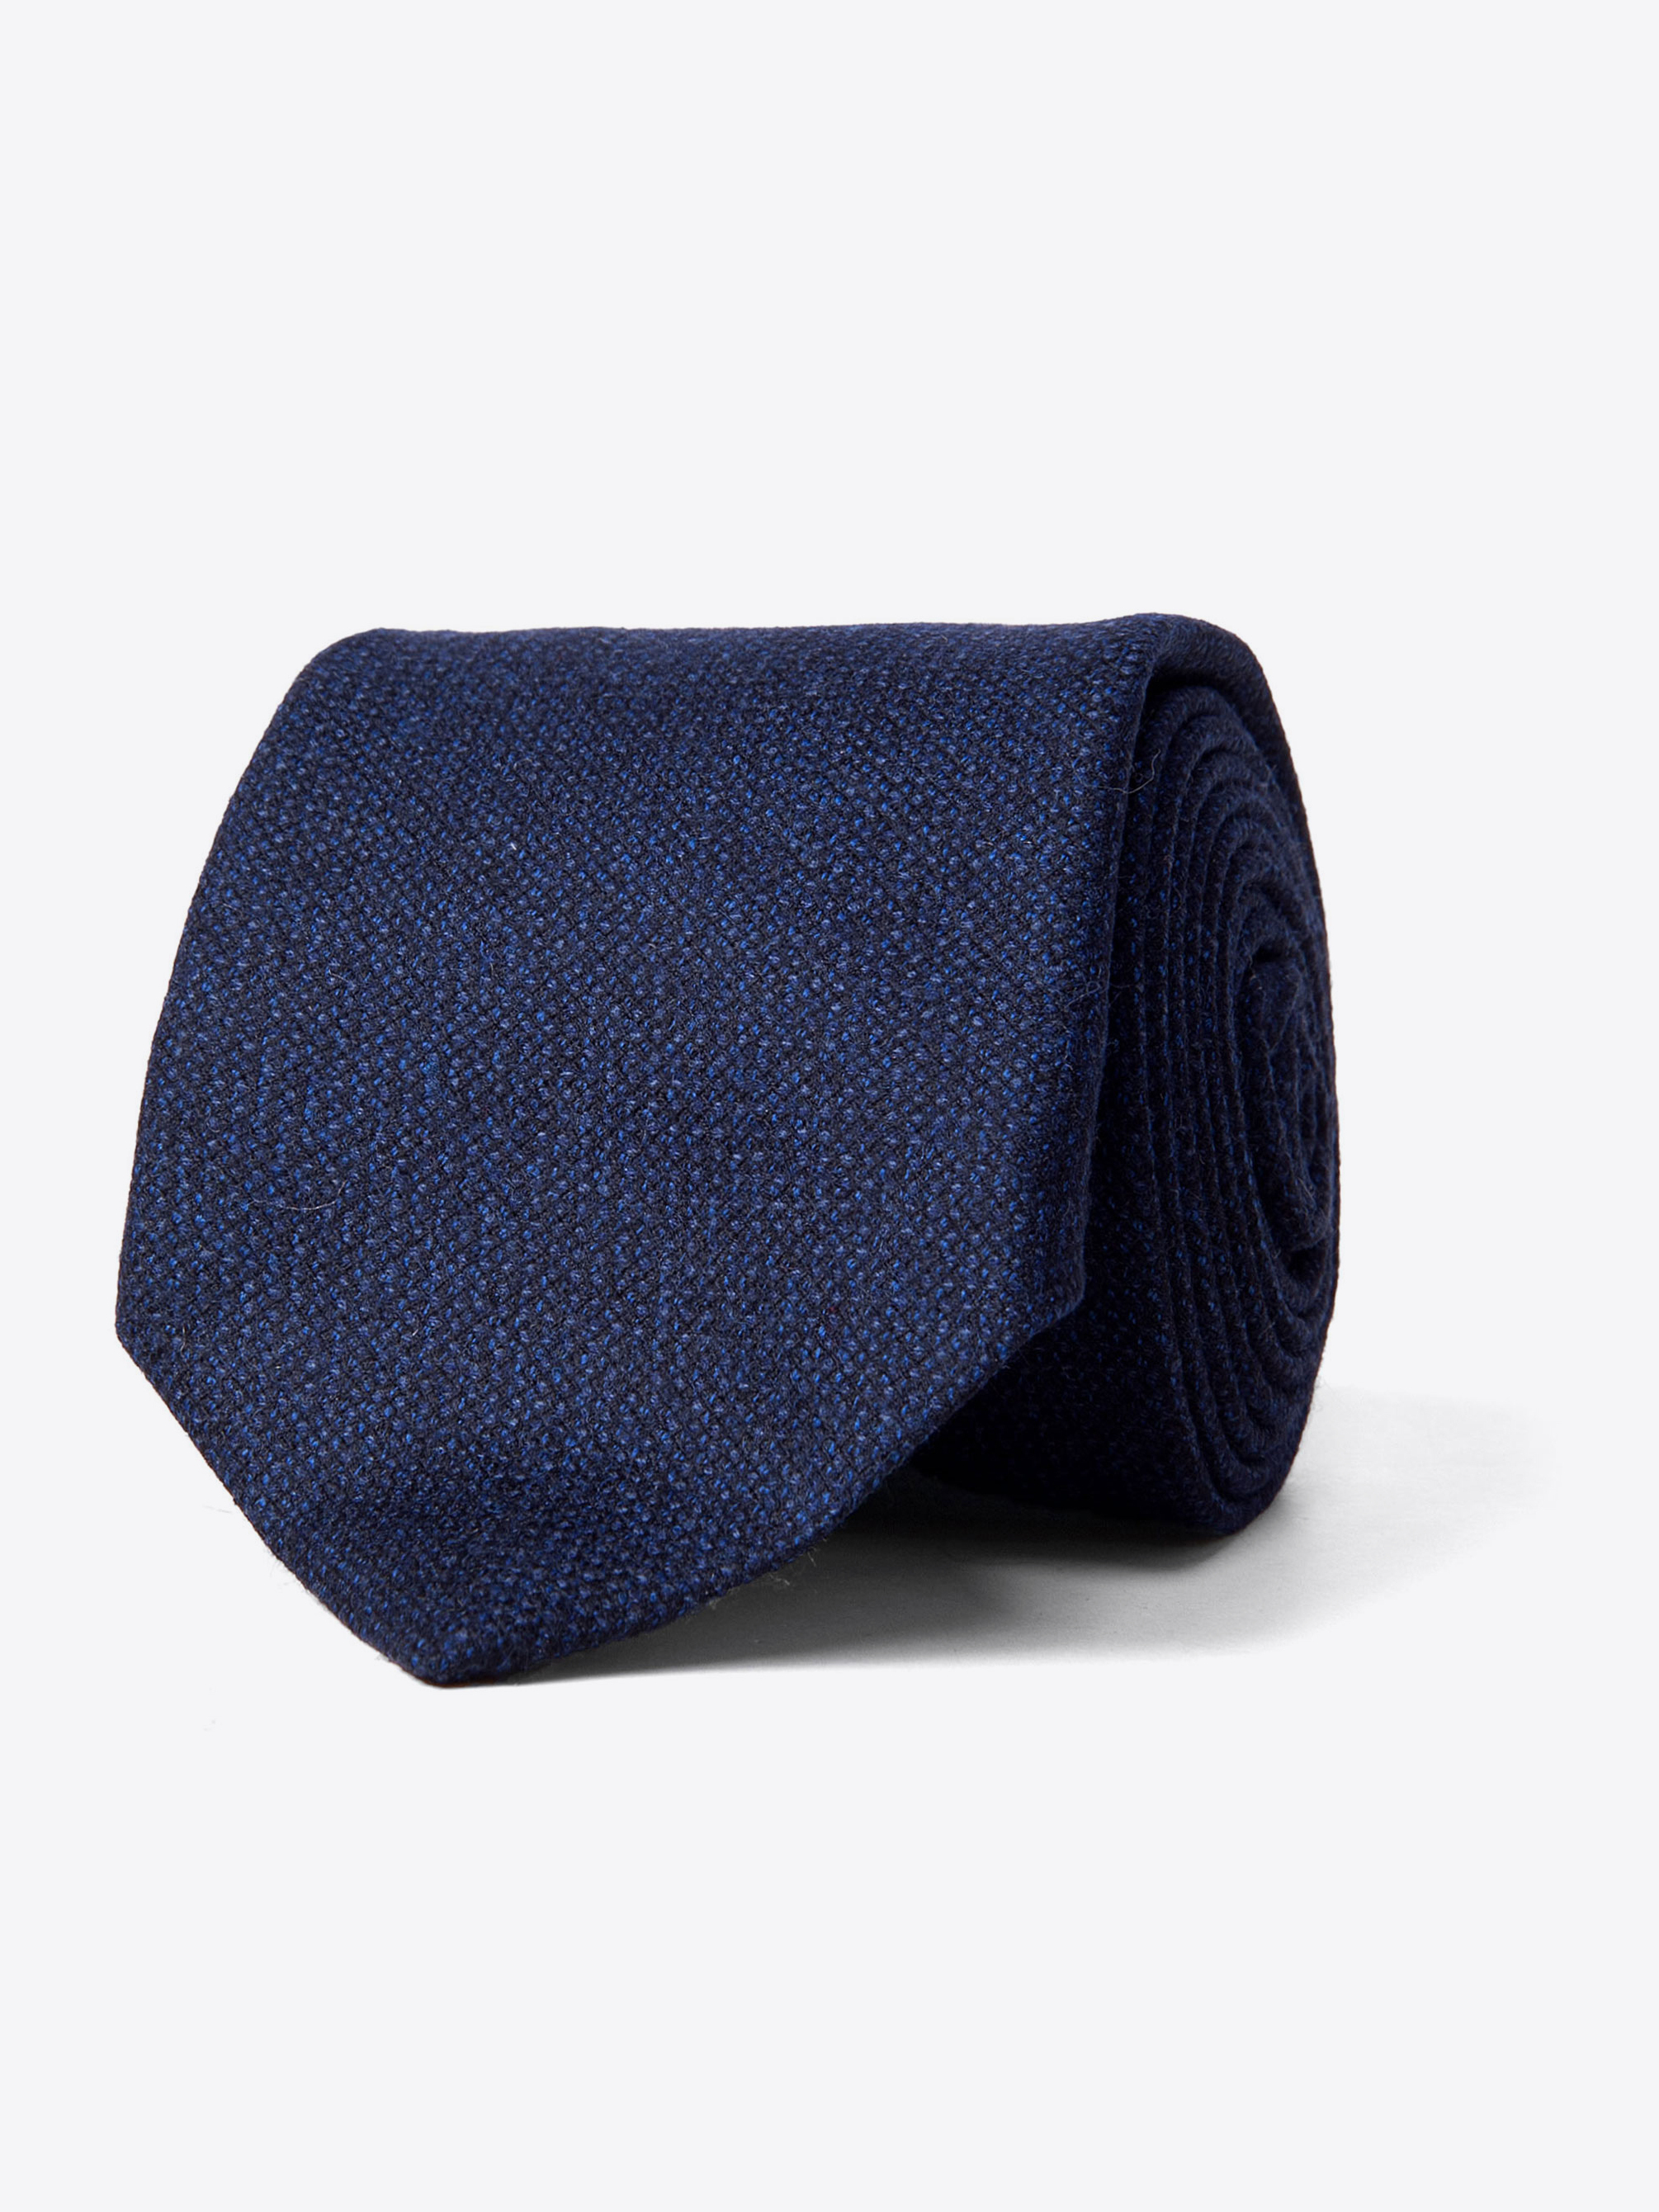 Zoom Image of Dark Indigo Solid Wool Tie